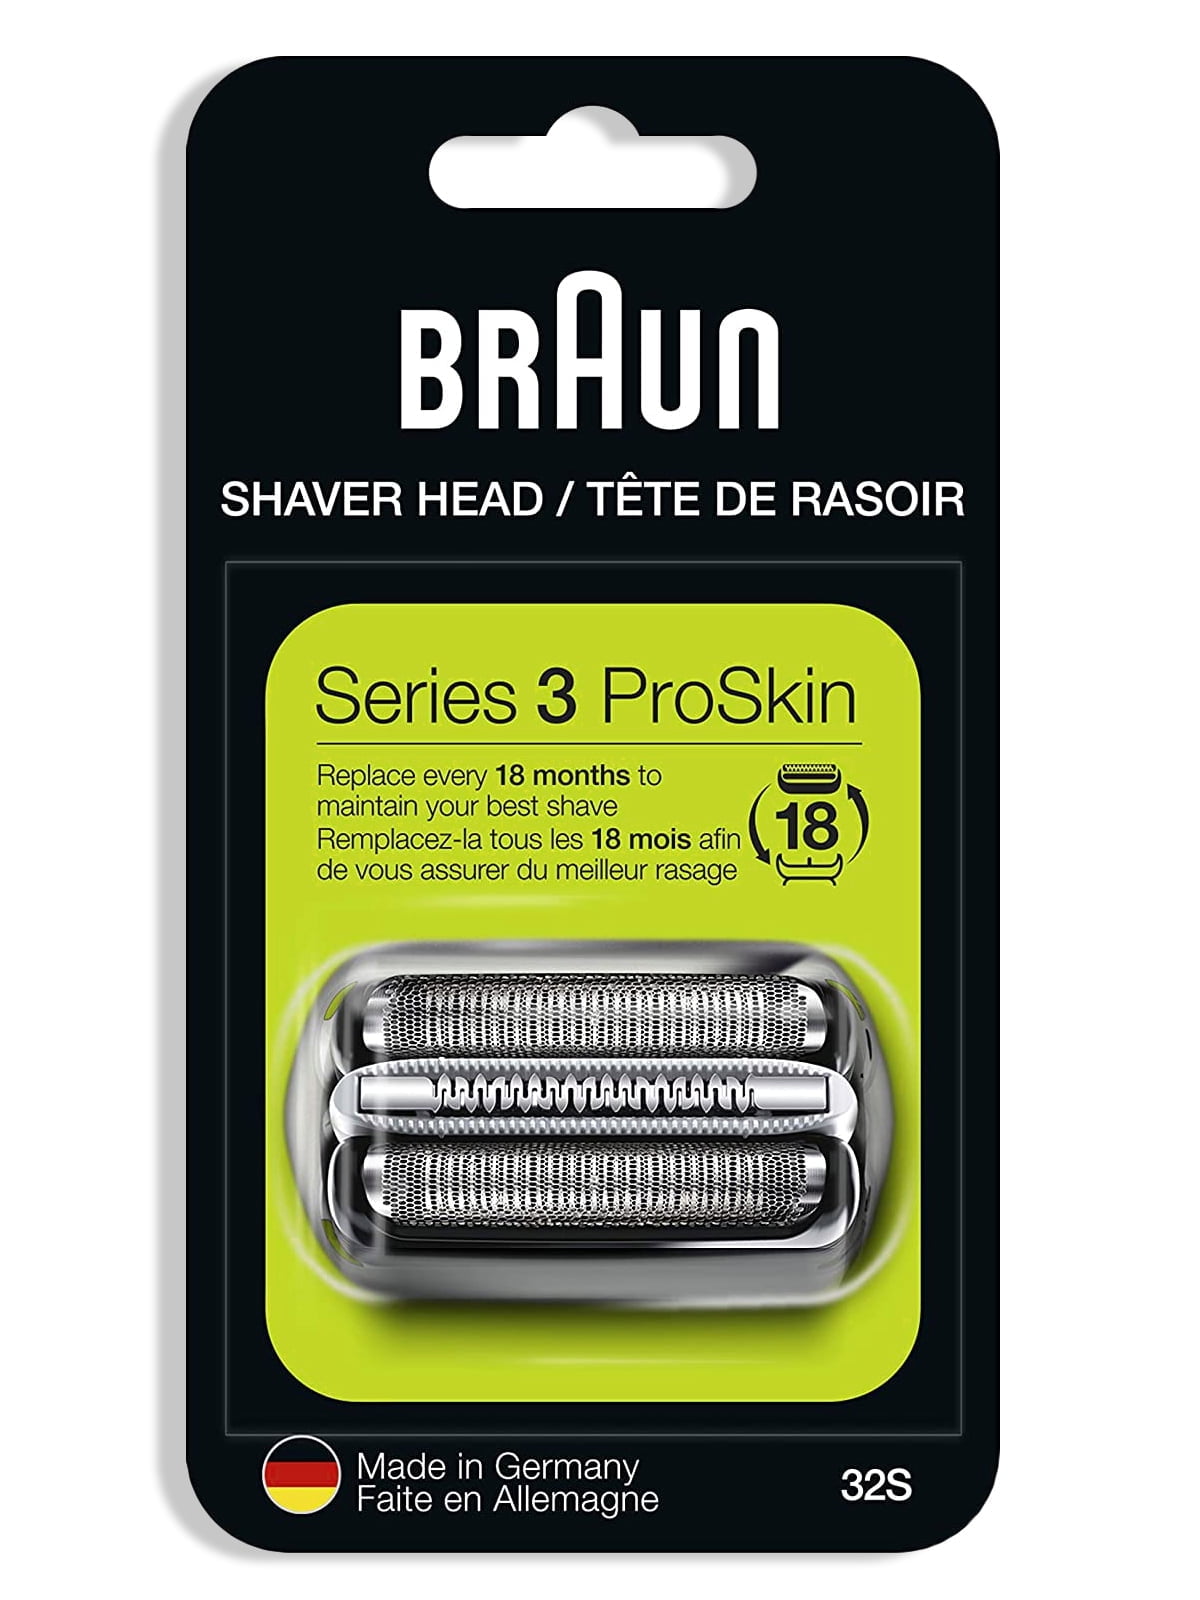 Braun Series 5 54b Male Razor Replacement Head Refill, 1 Count